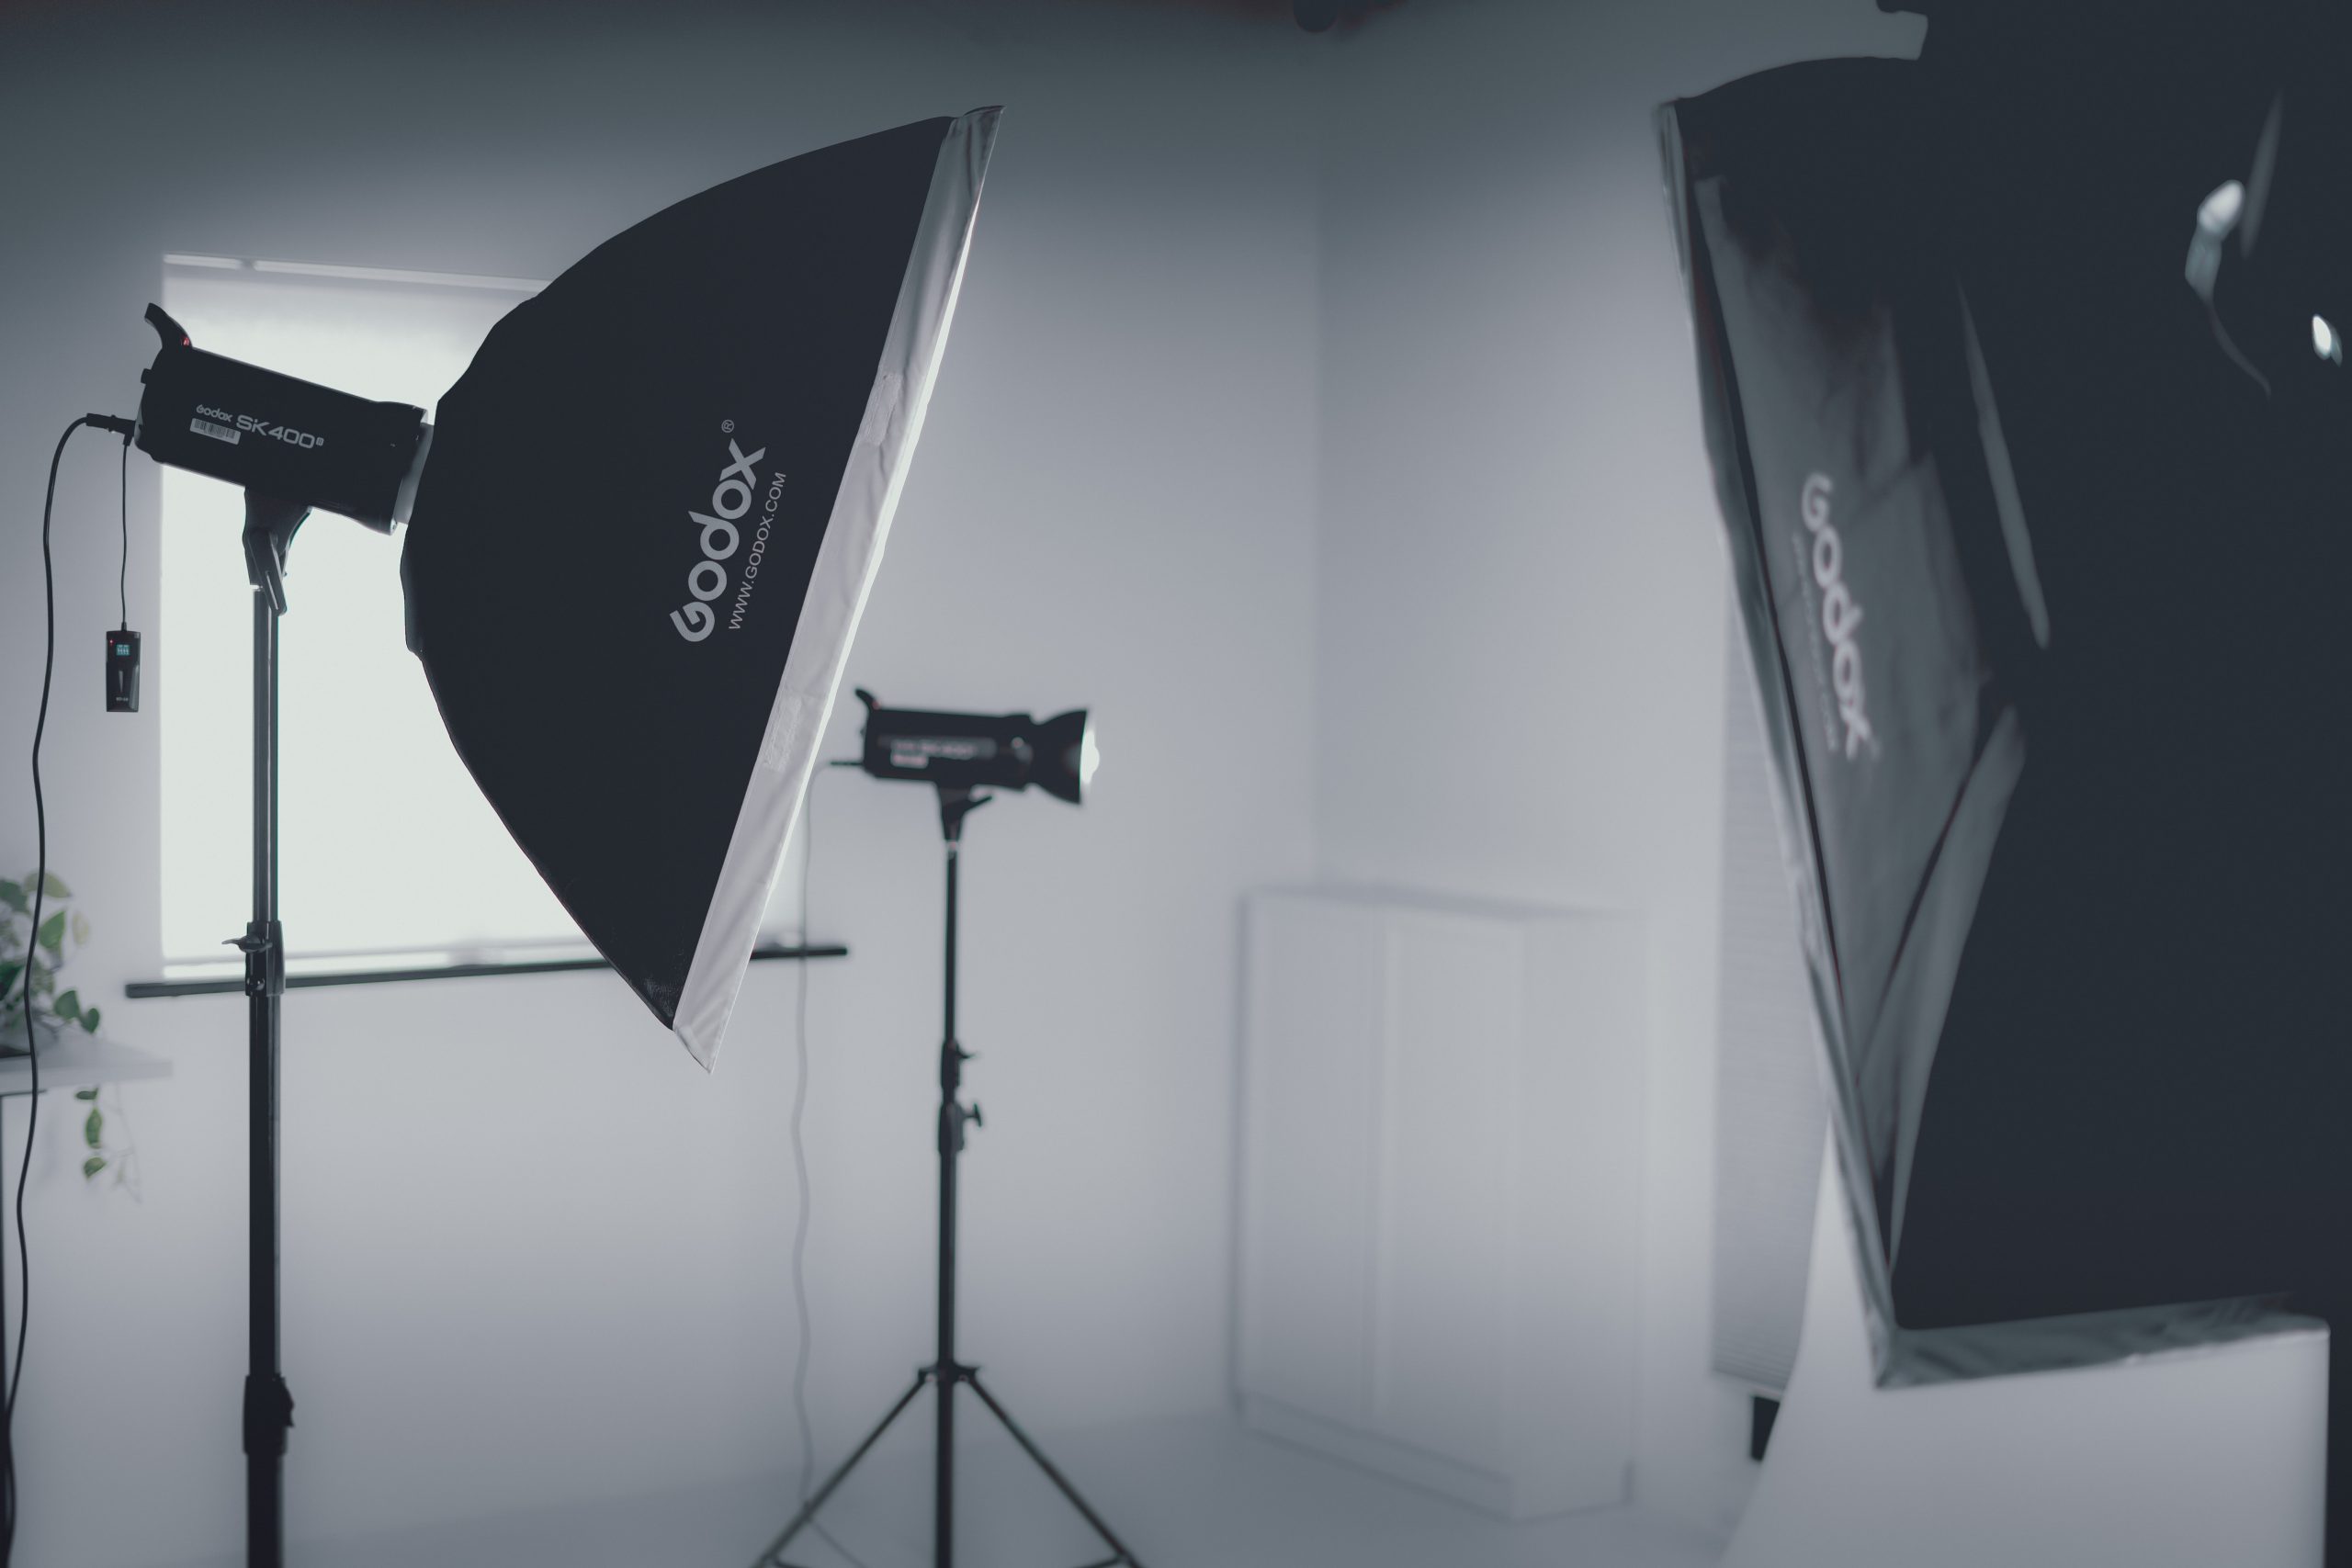 Professional lighting equipment in a photo studio